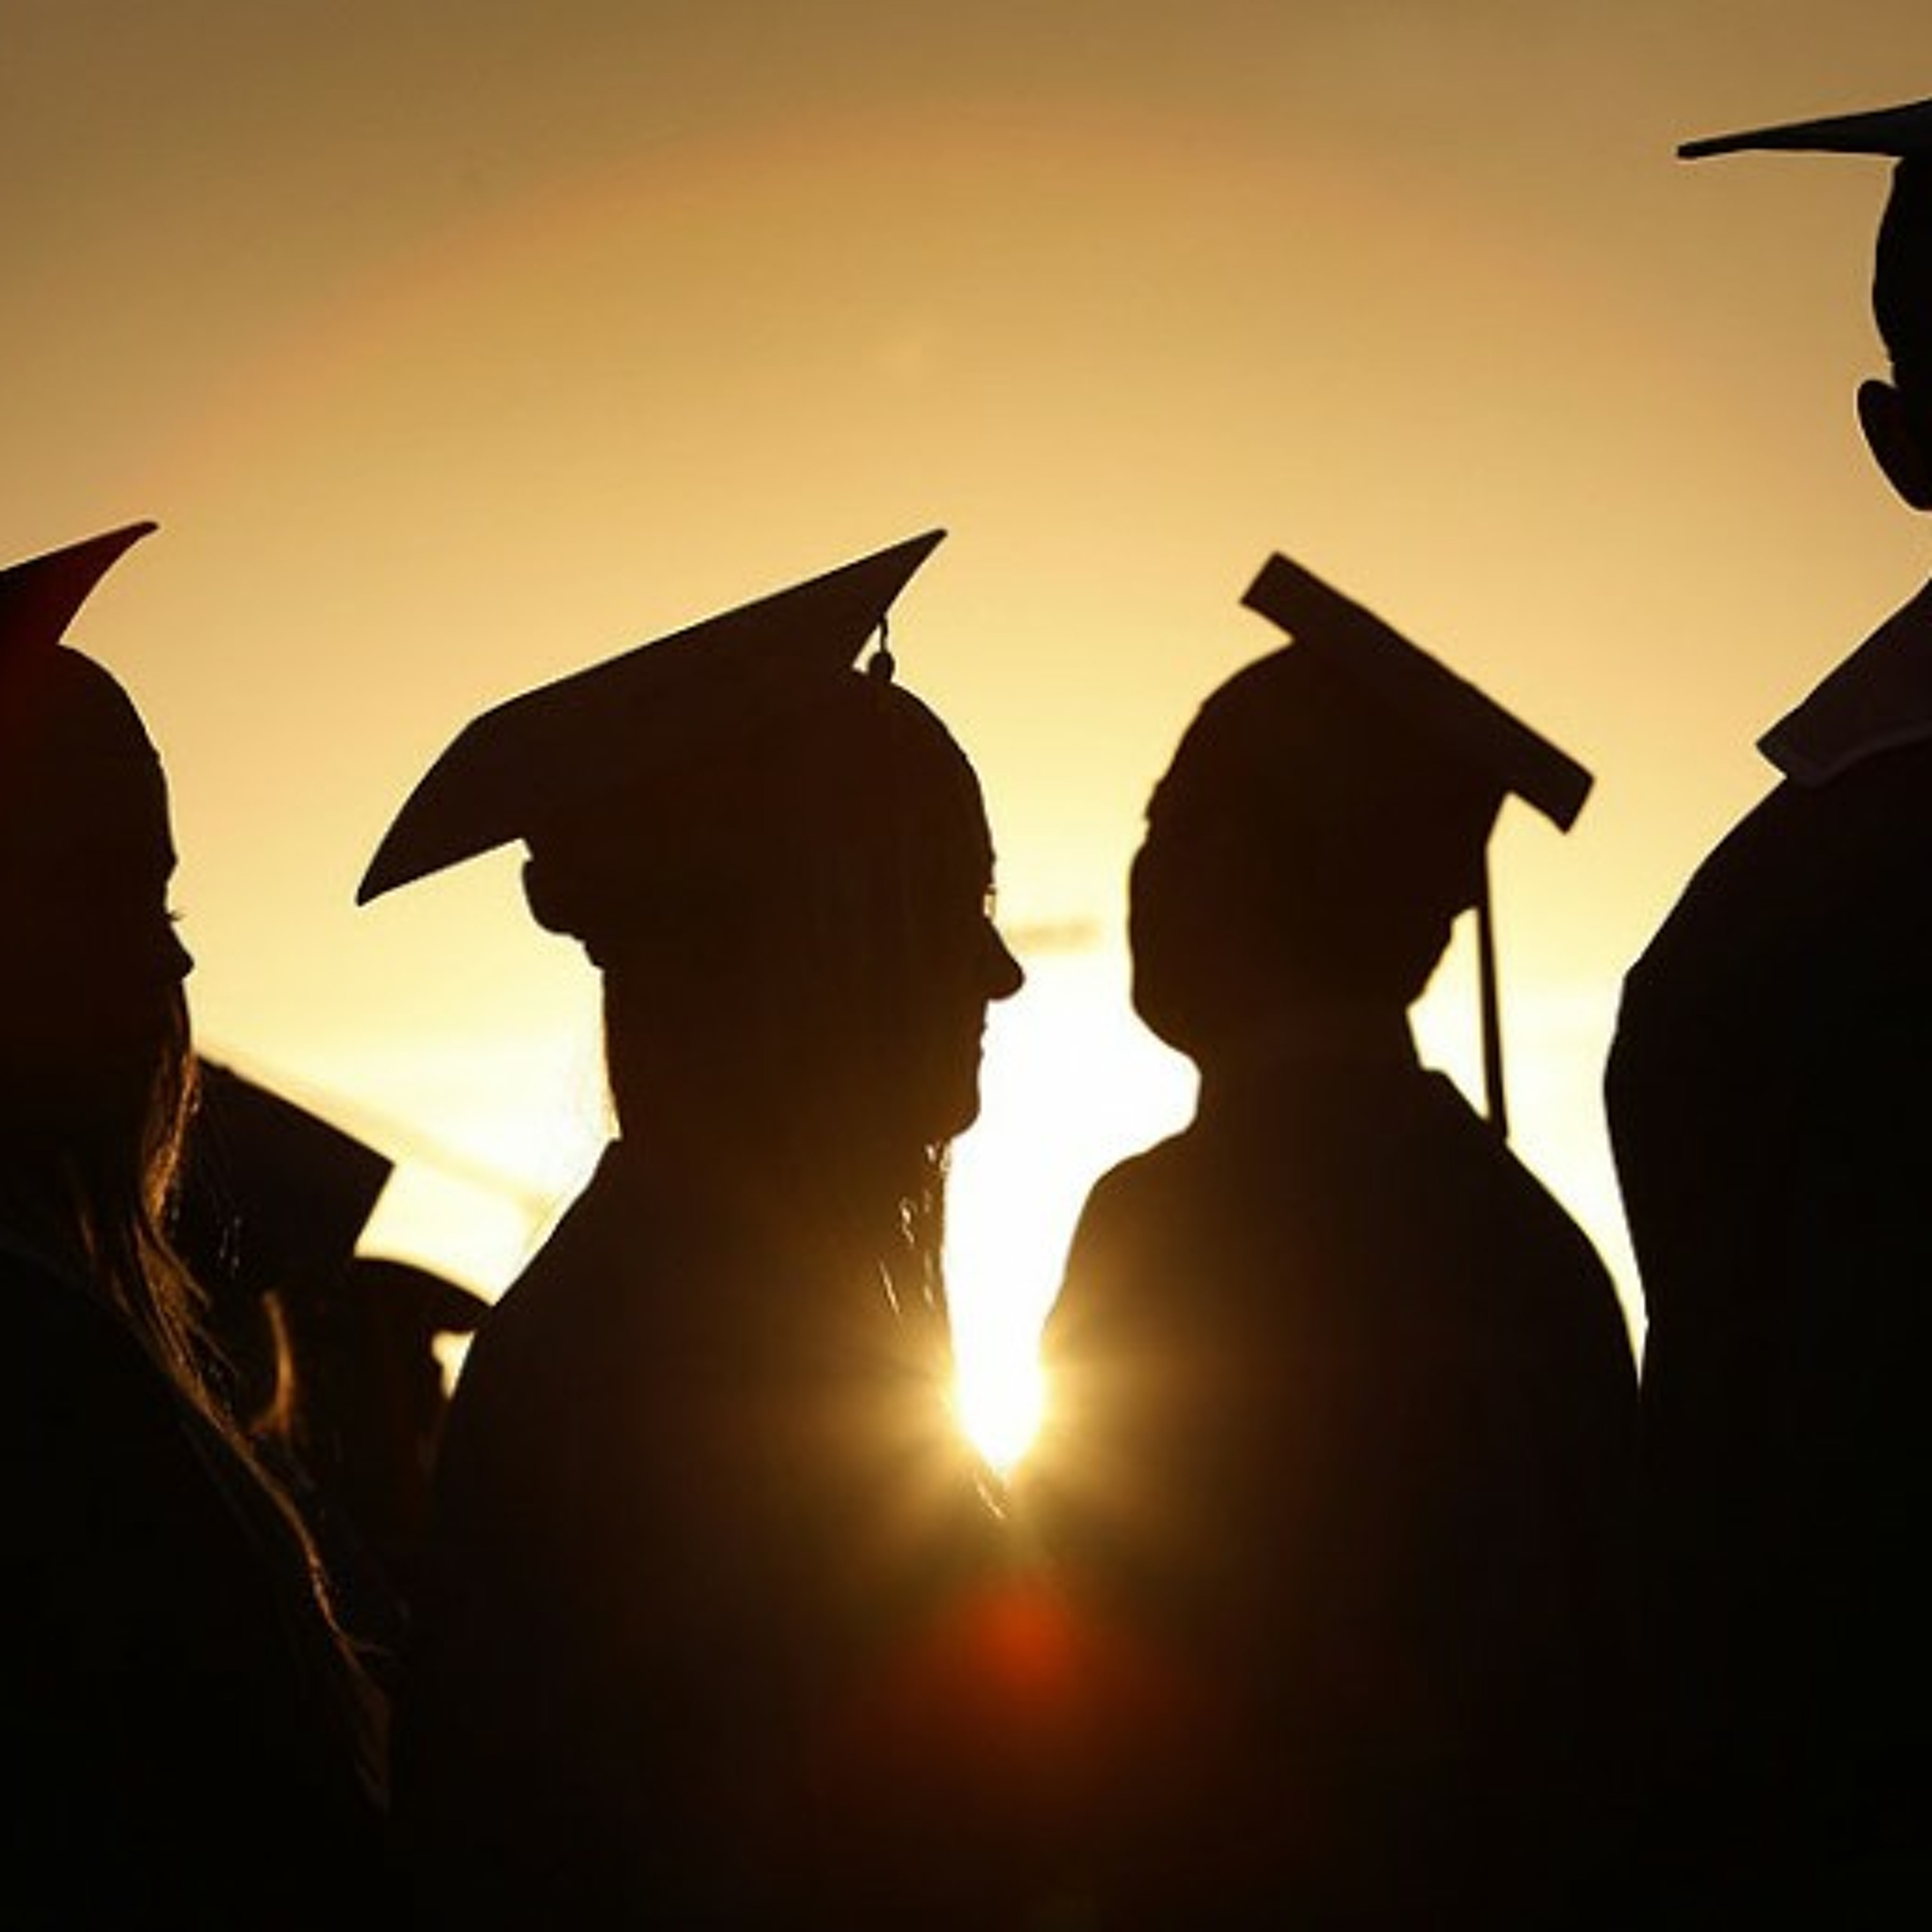 How Prepared Are Missouri High School Graduates?